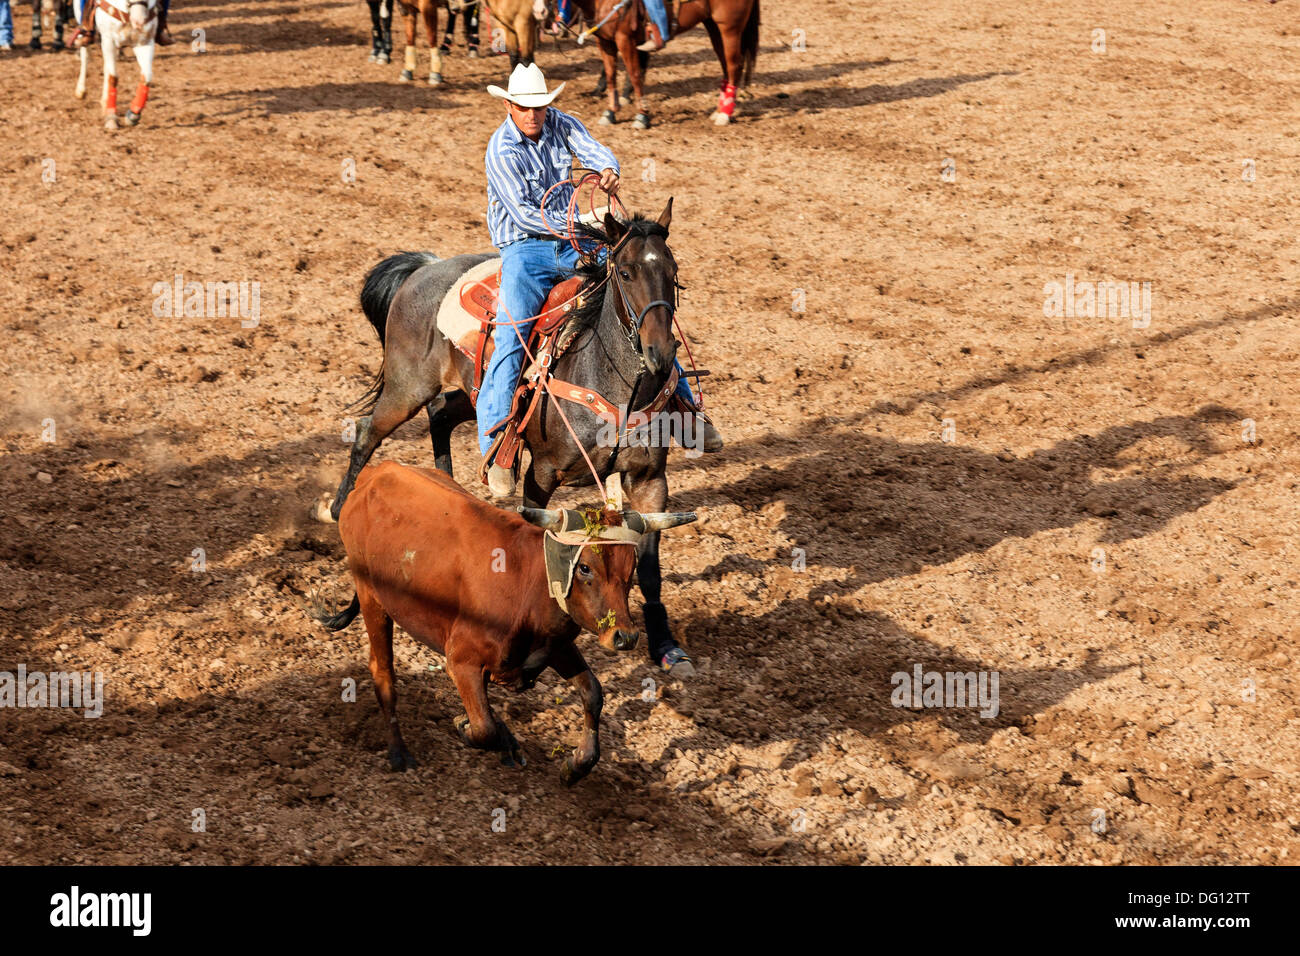 Cowboy on horseback, roping a young steer or calf at Rimrock rodeo, Grand Junction, Colorado, USA Stock Photo